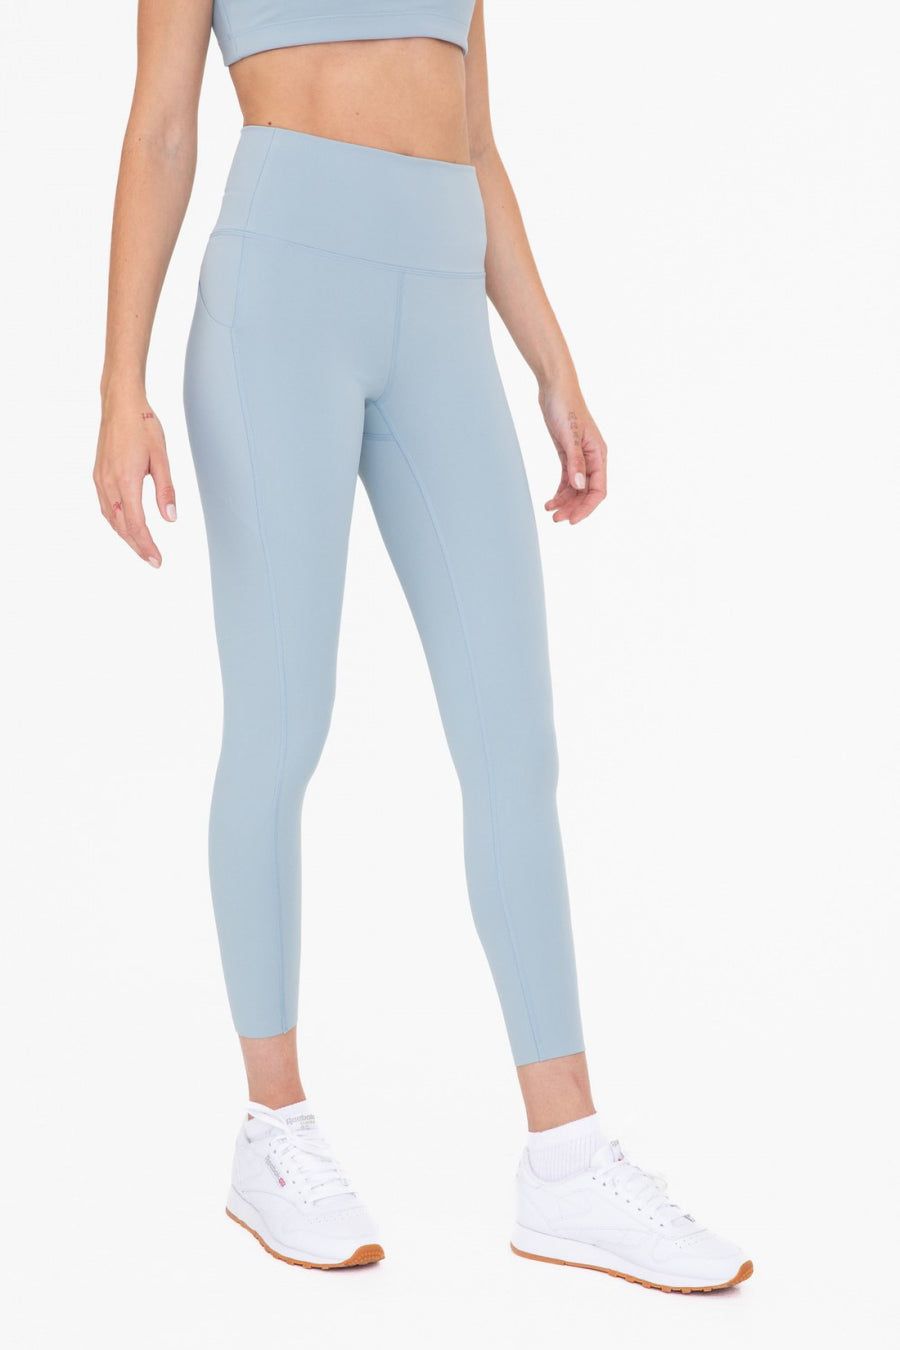 Shop the blue leggings fashion bloggers love on  - Lemon8 Search